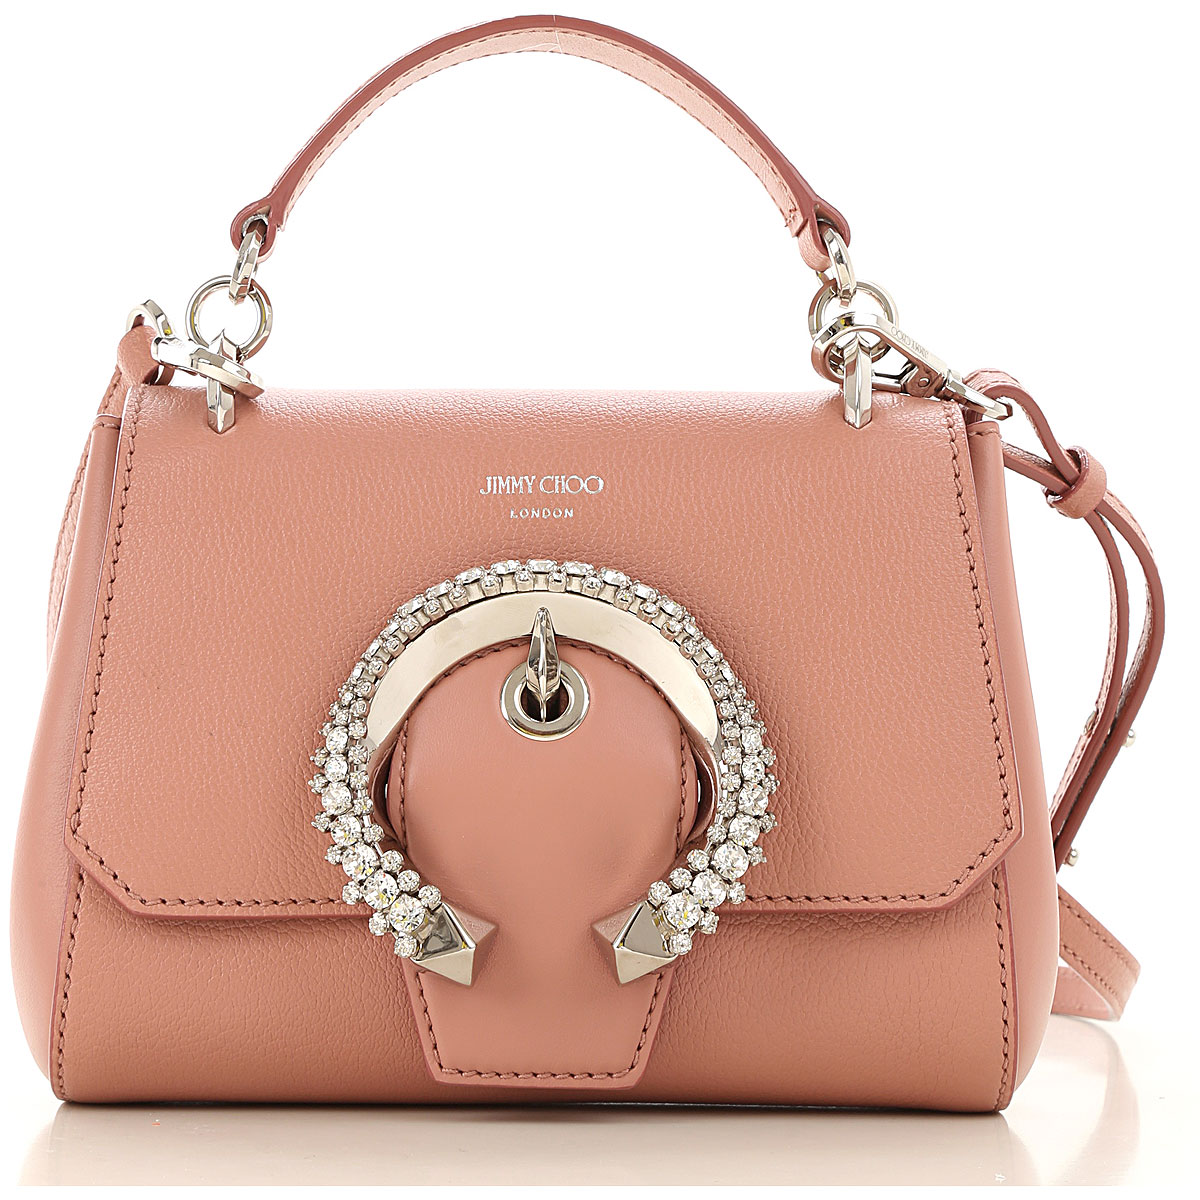 Handbags Jimmy Choo, Style code: madeline-s-1